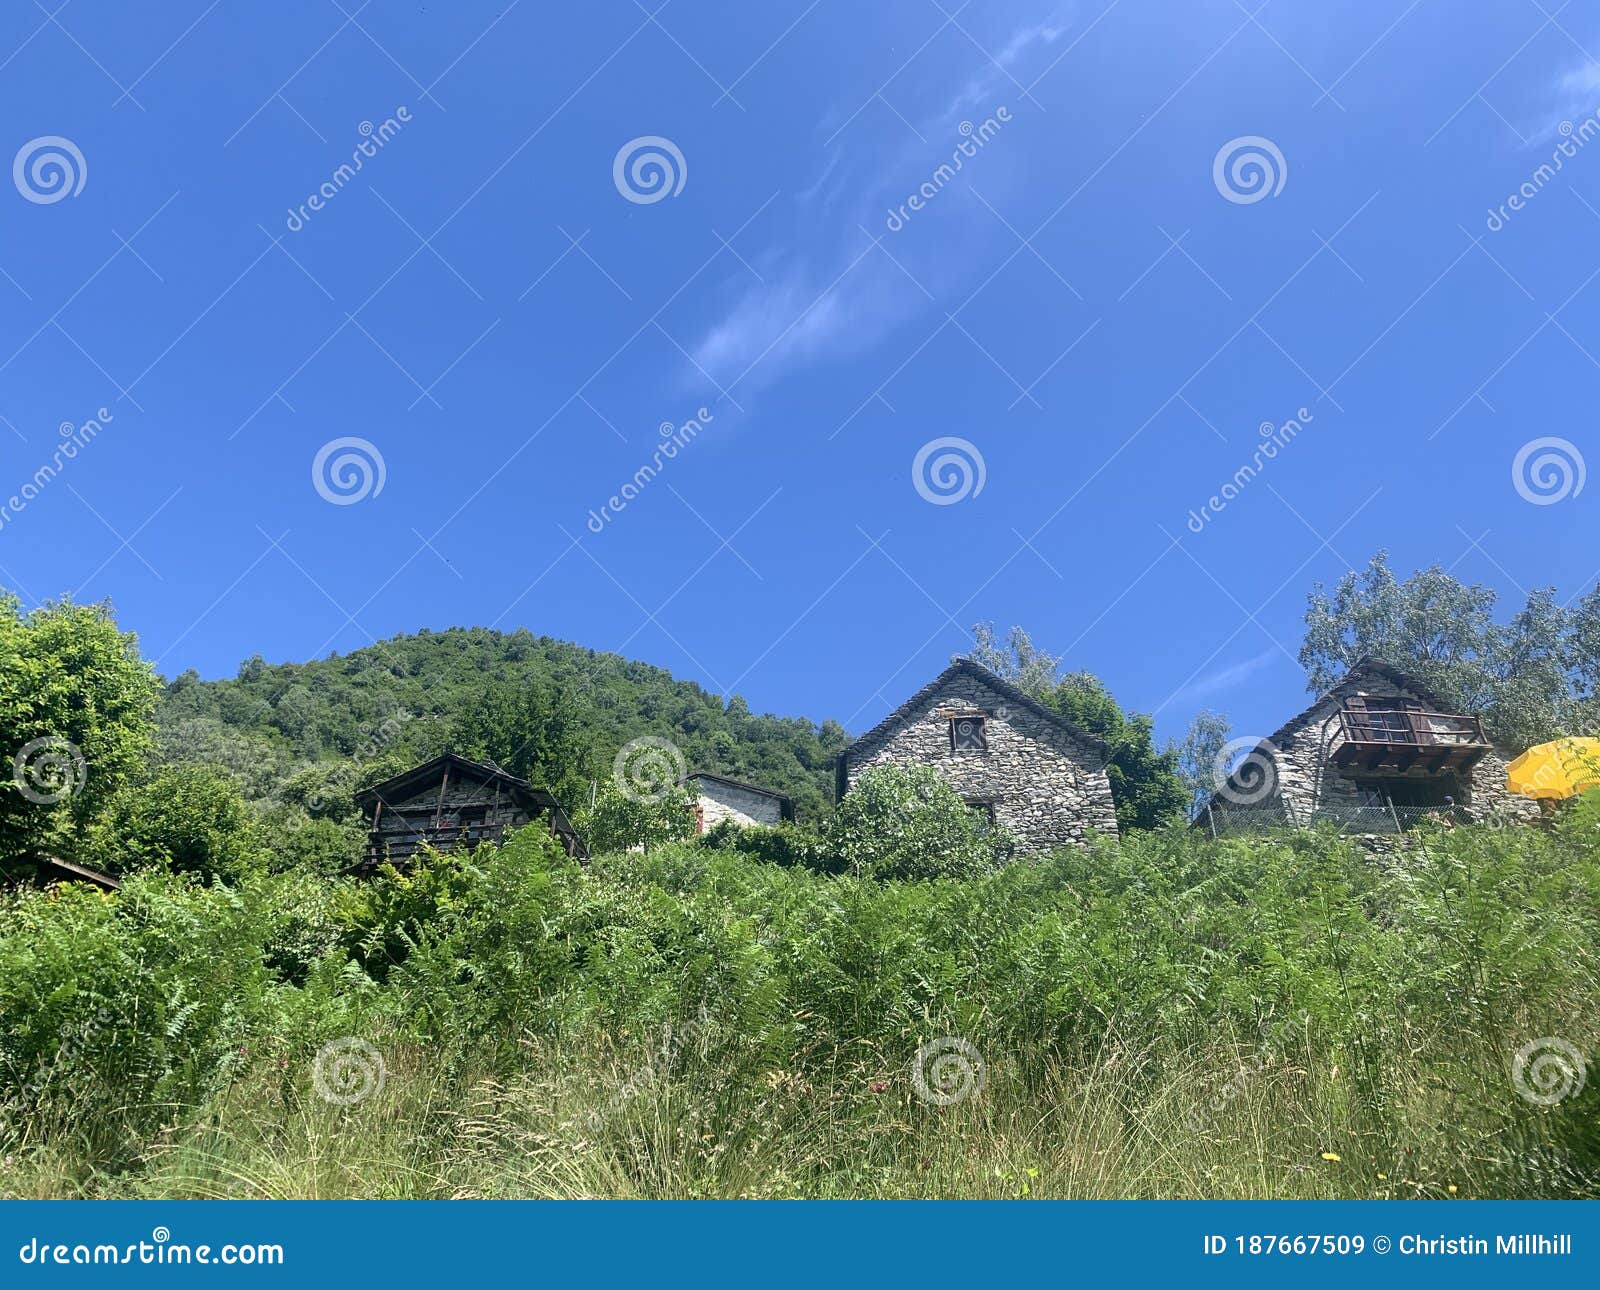 swiss rustico huts